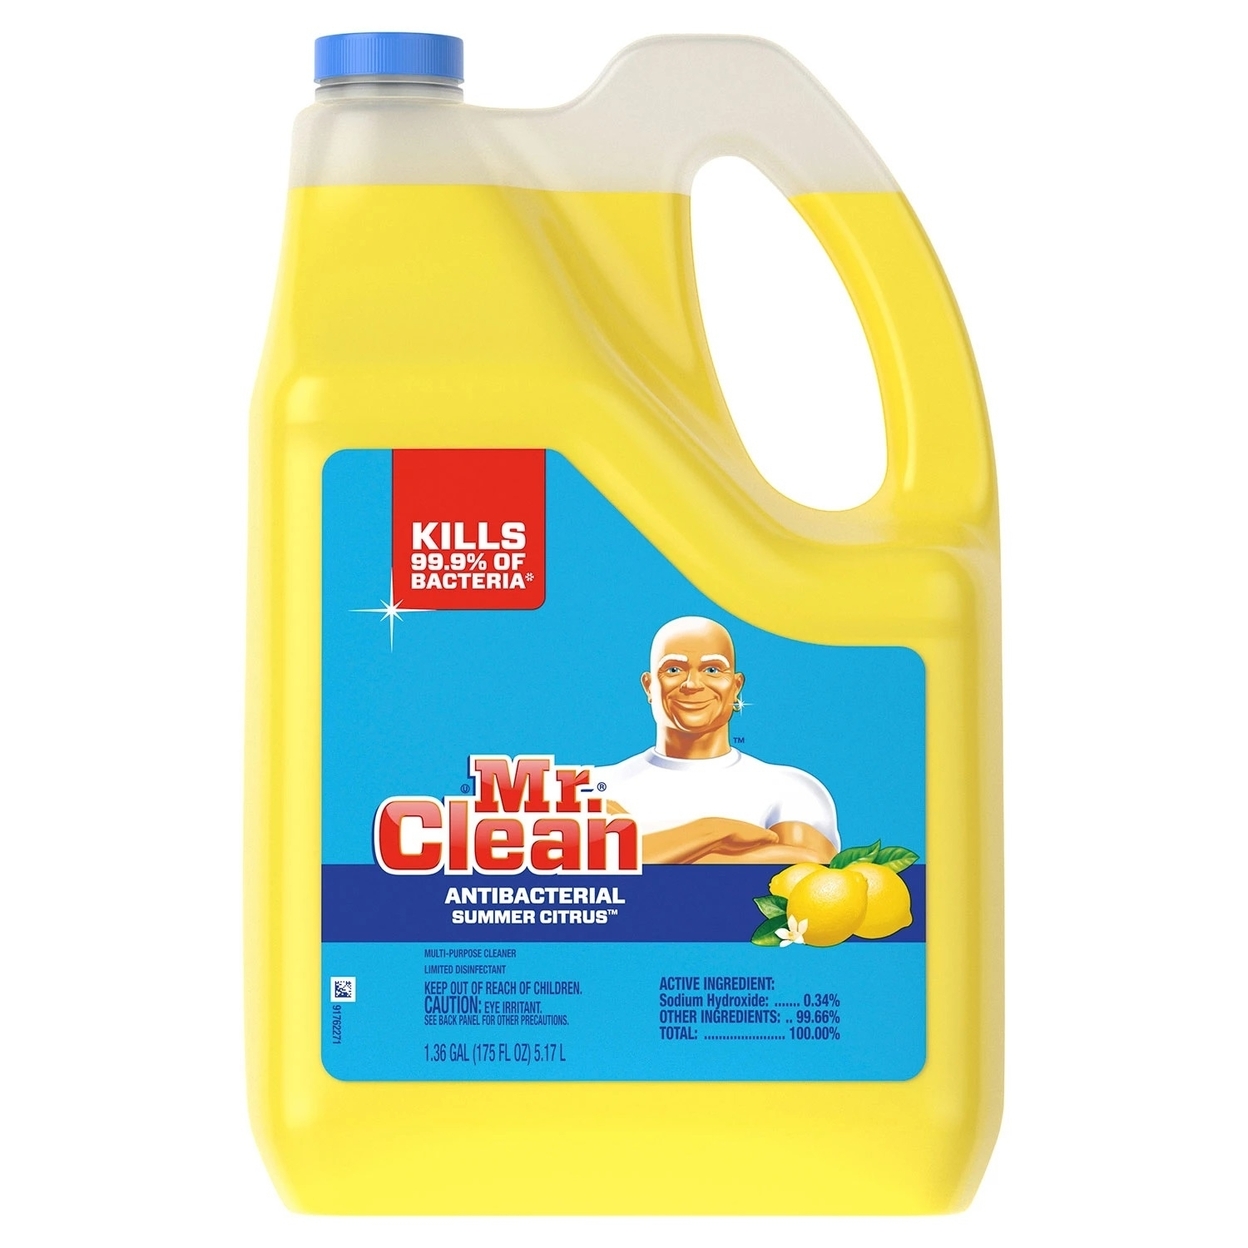 Mr. Clean Antibacterial Multi-Surface Cleaner, Summer Citrus (175 Fluid Ounce)